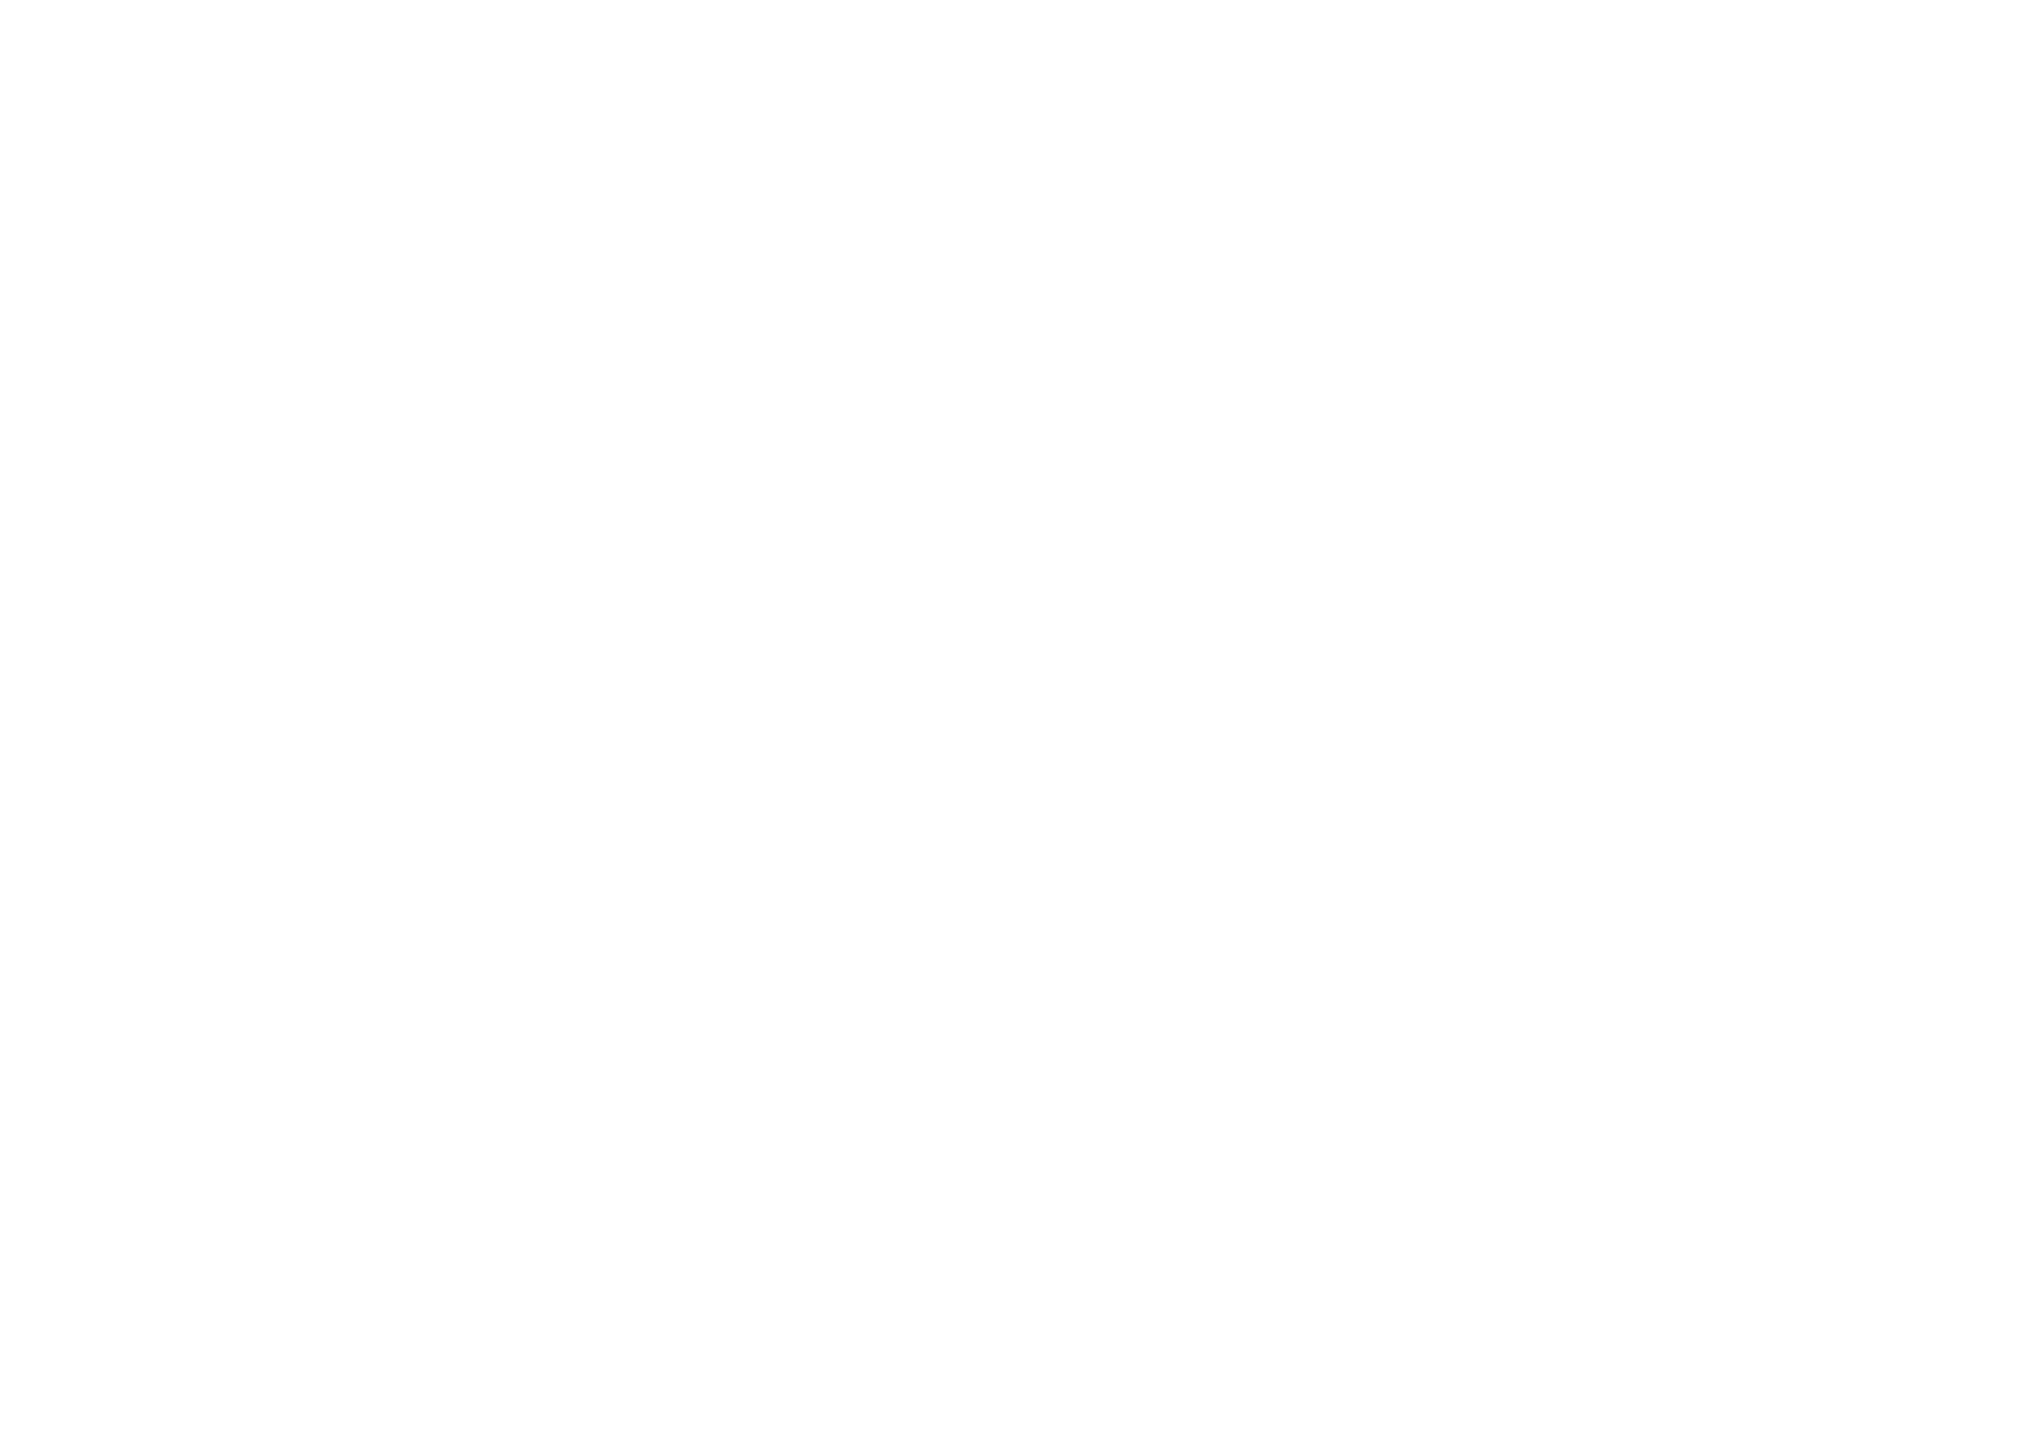 VALIANT team logo